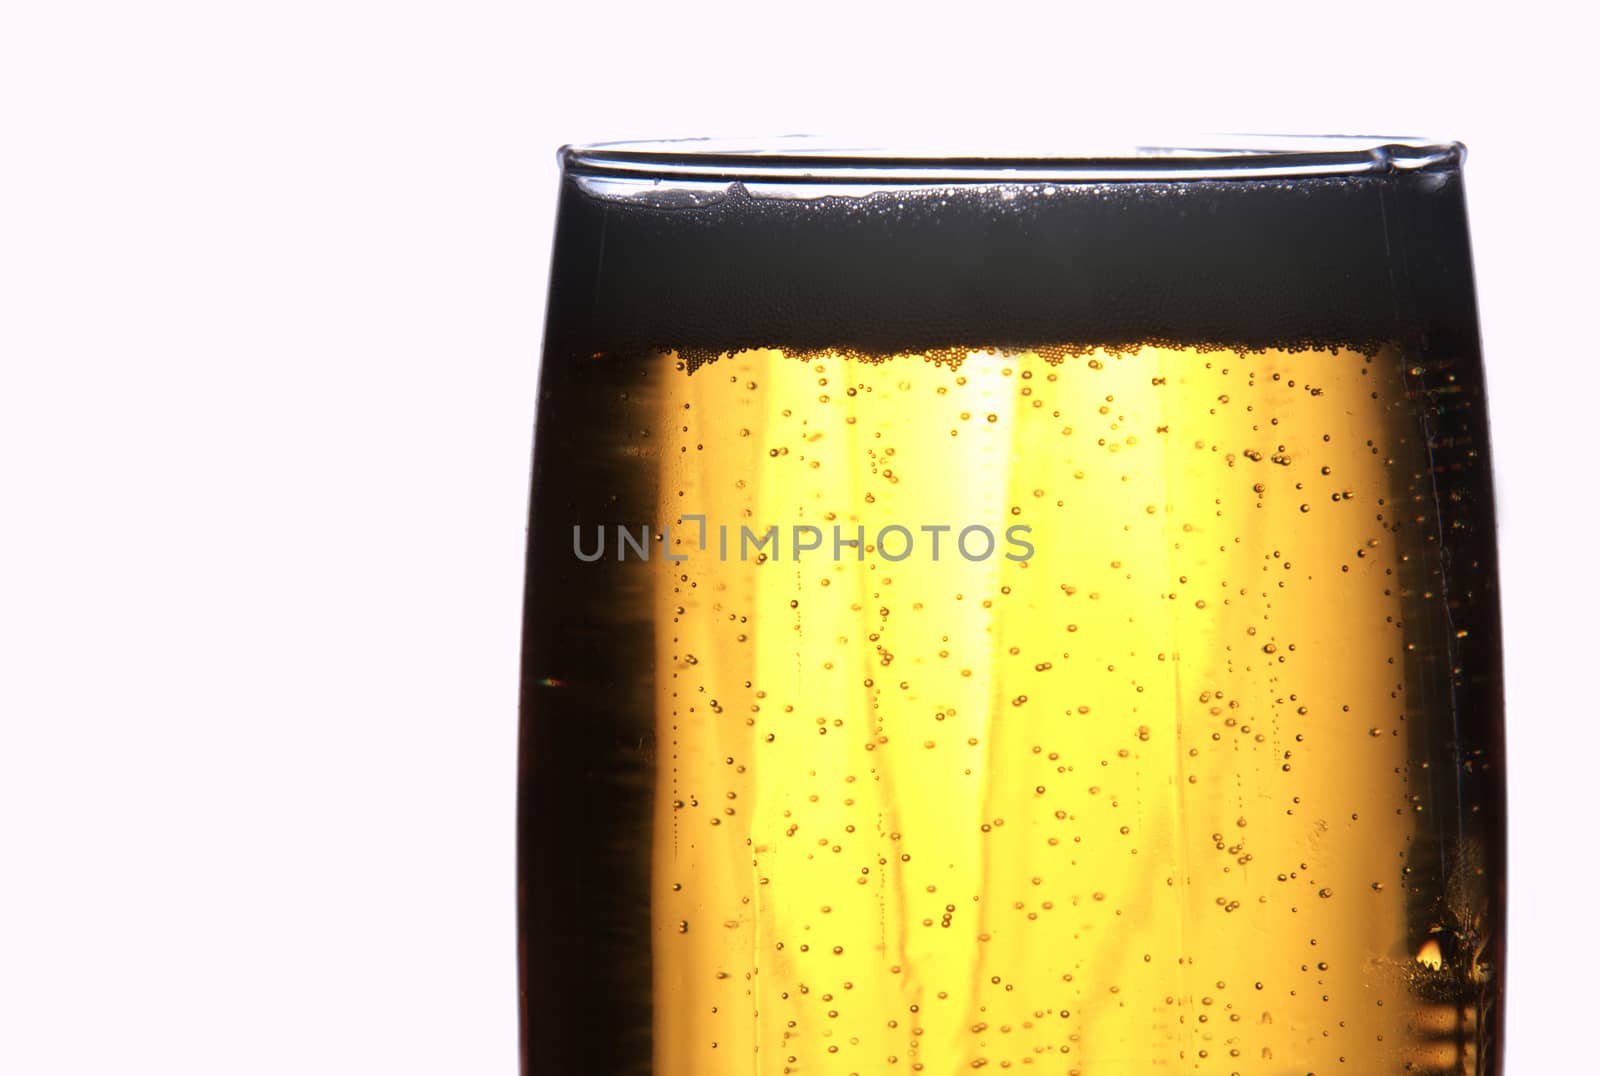 Alcohol conceptual image. Mug full of beer on black background.